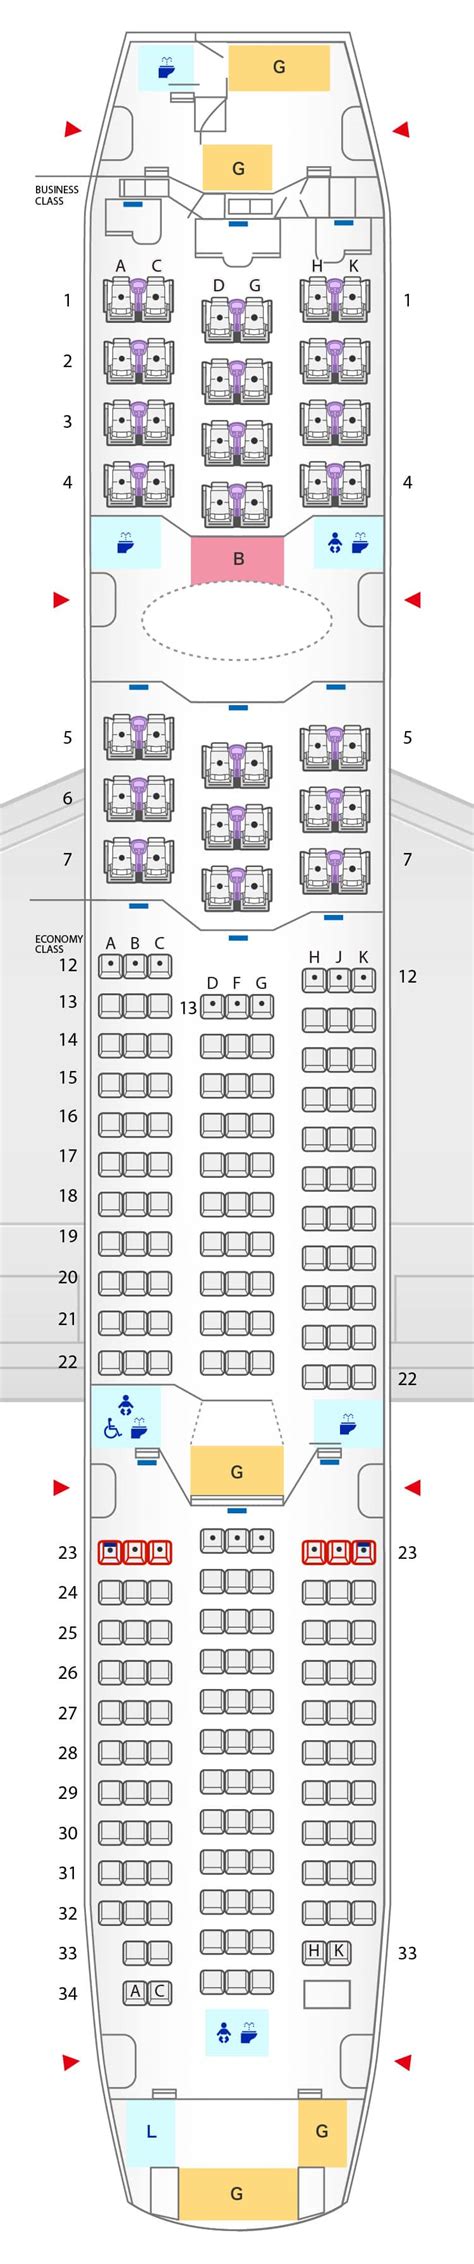 boeing 787 dreamliner seating plan